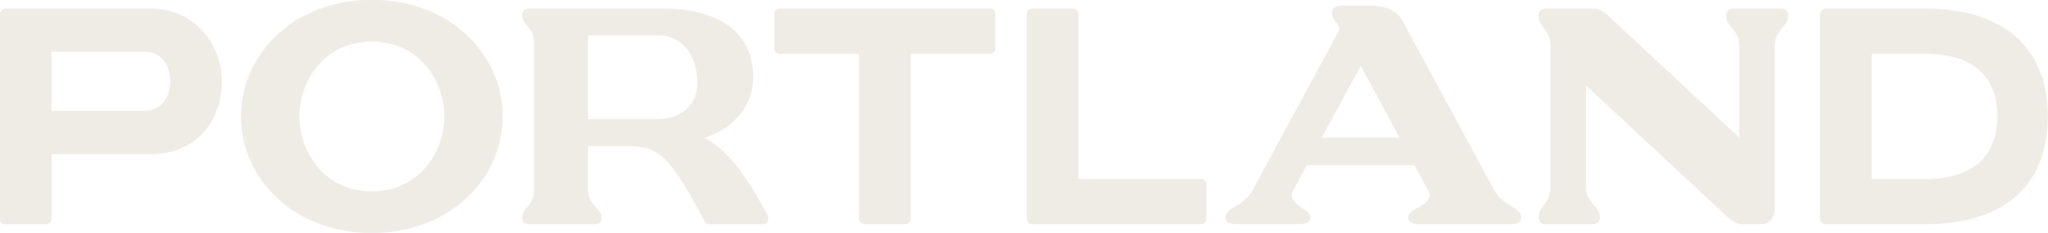 travel portland logo